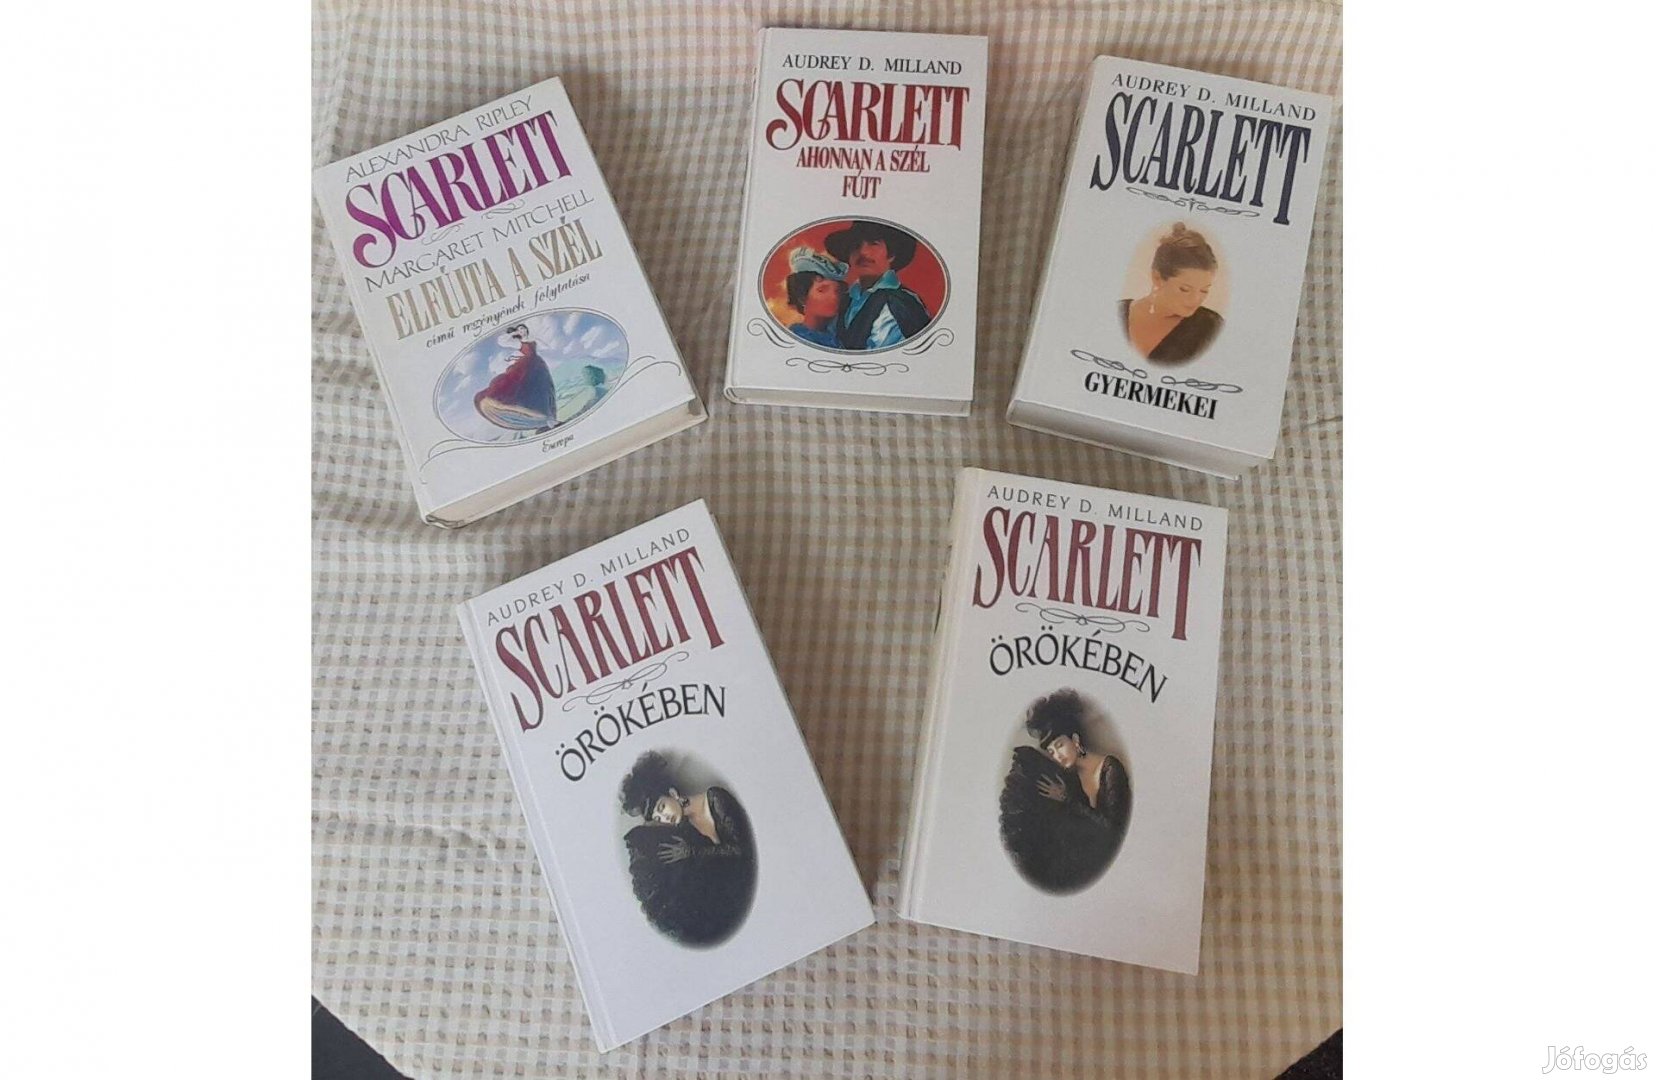 Scarlett könyvek